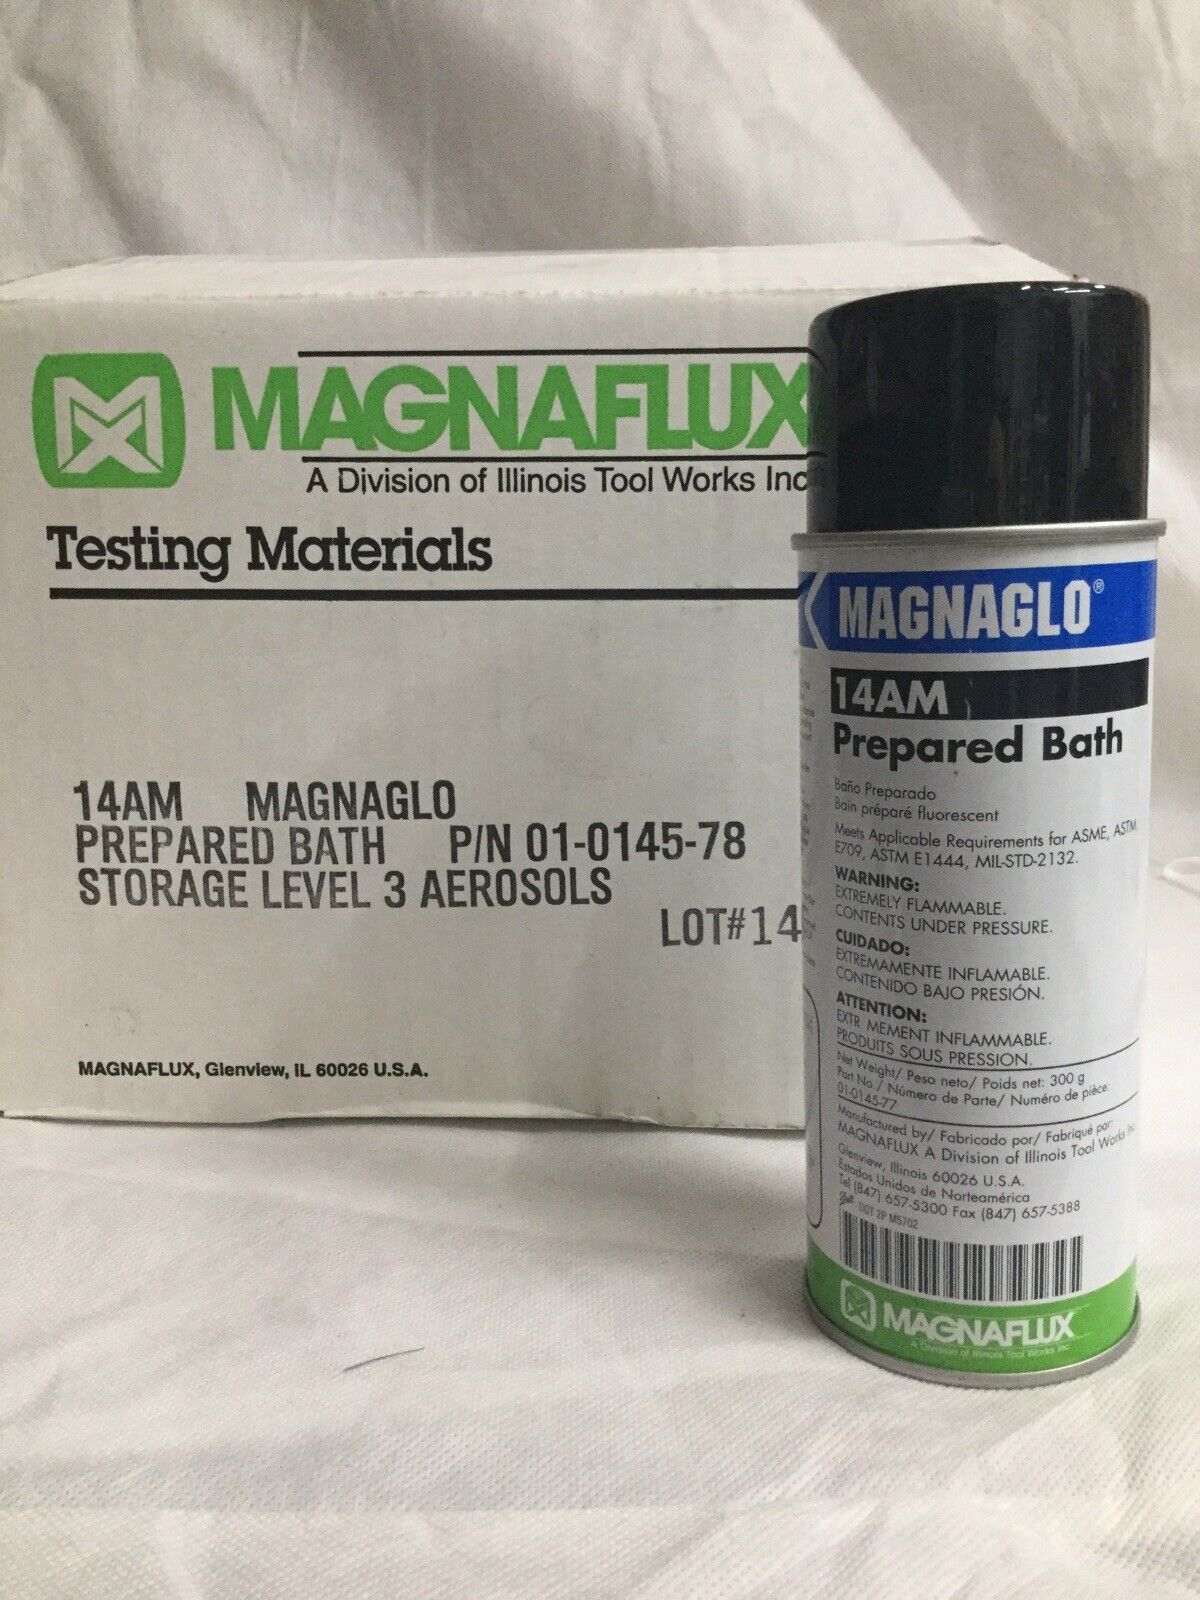 Magnaflux Testing Material Magnaglo 14AM Prepared Bath Aerosol Box Of 12 03/2016